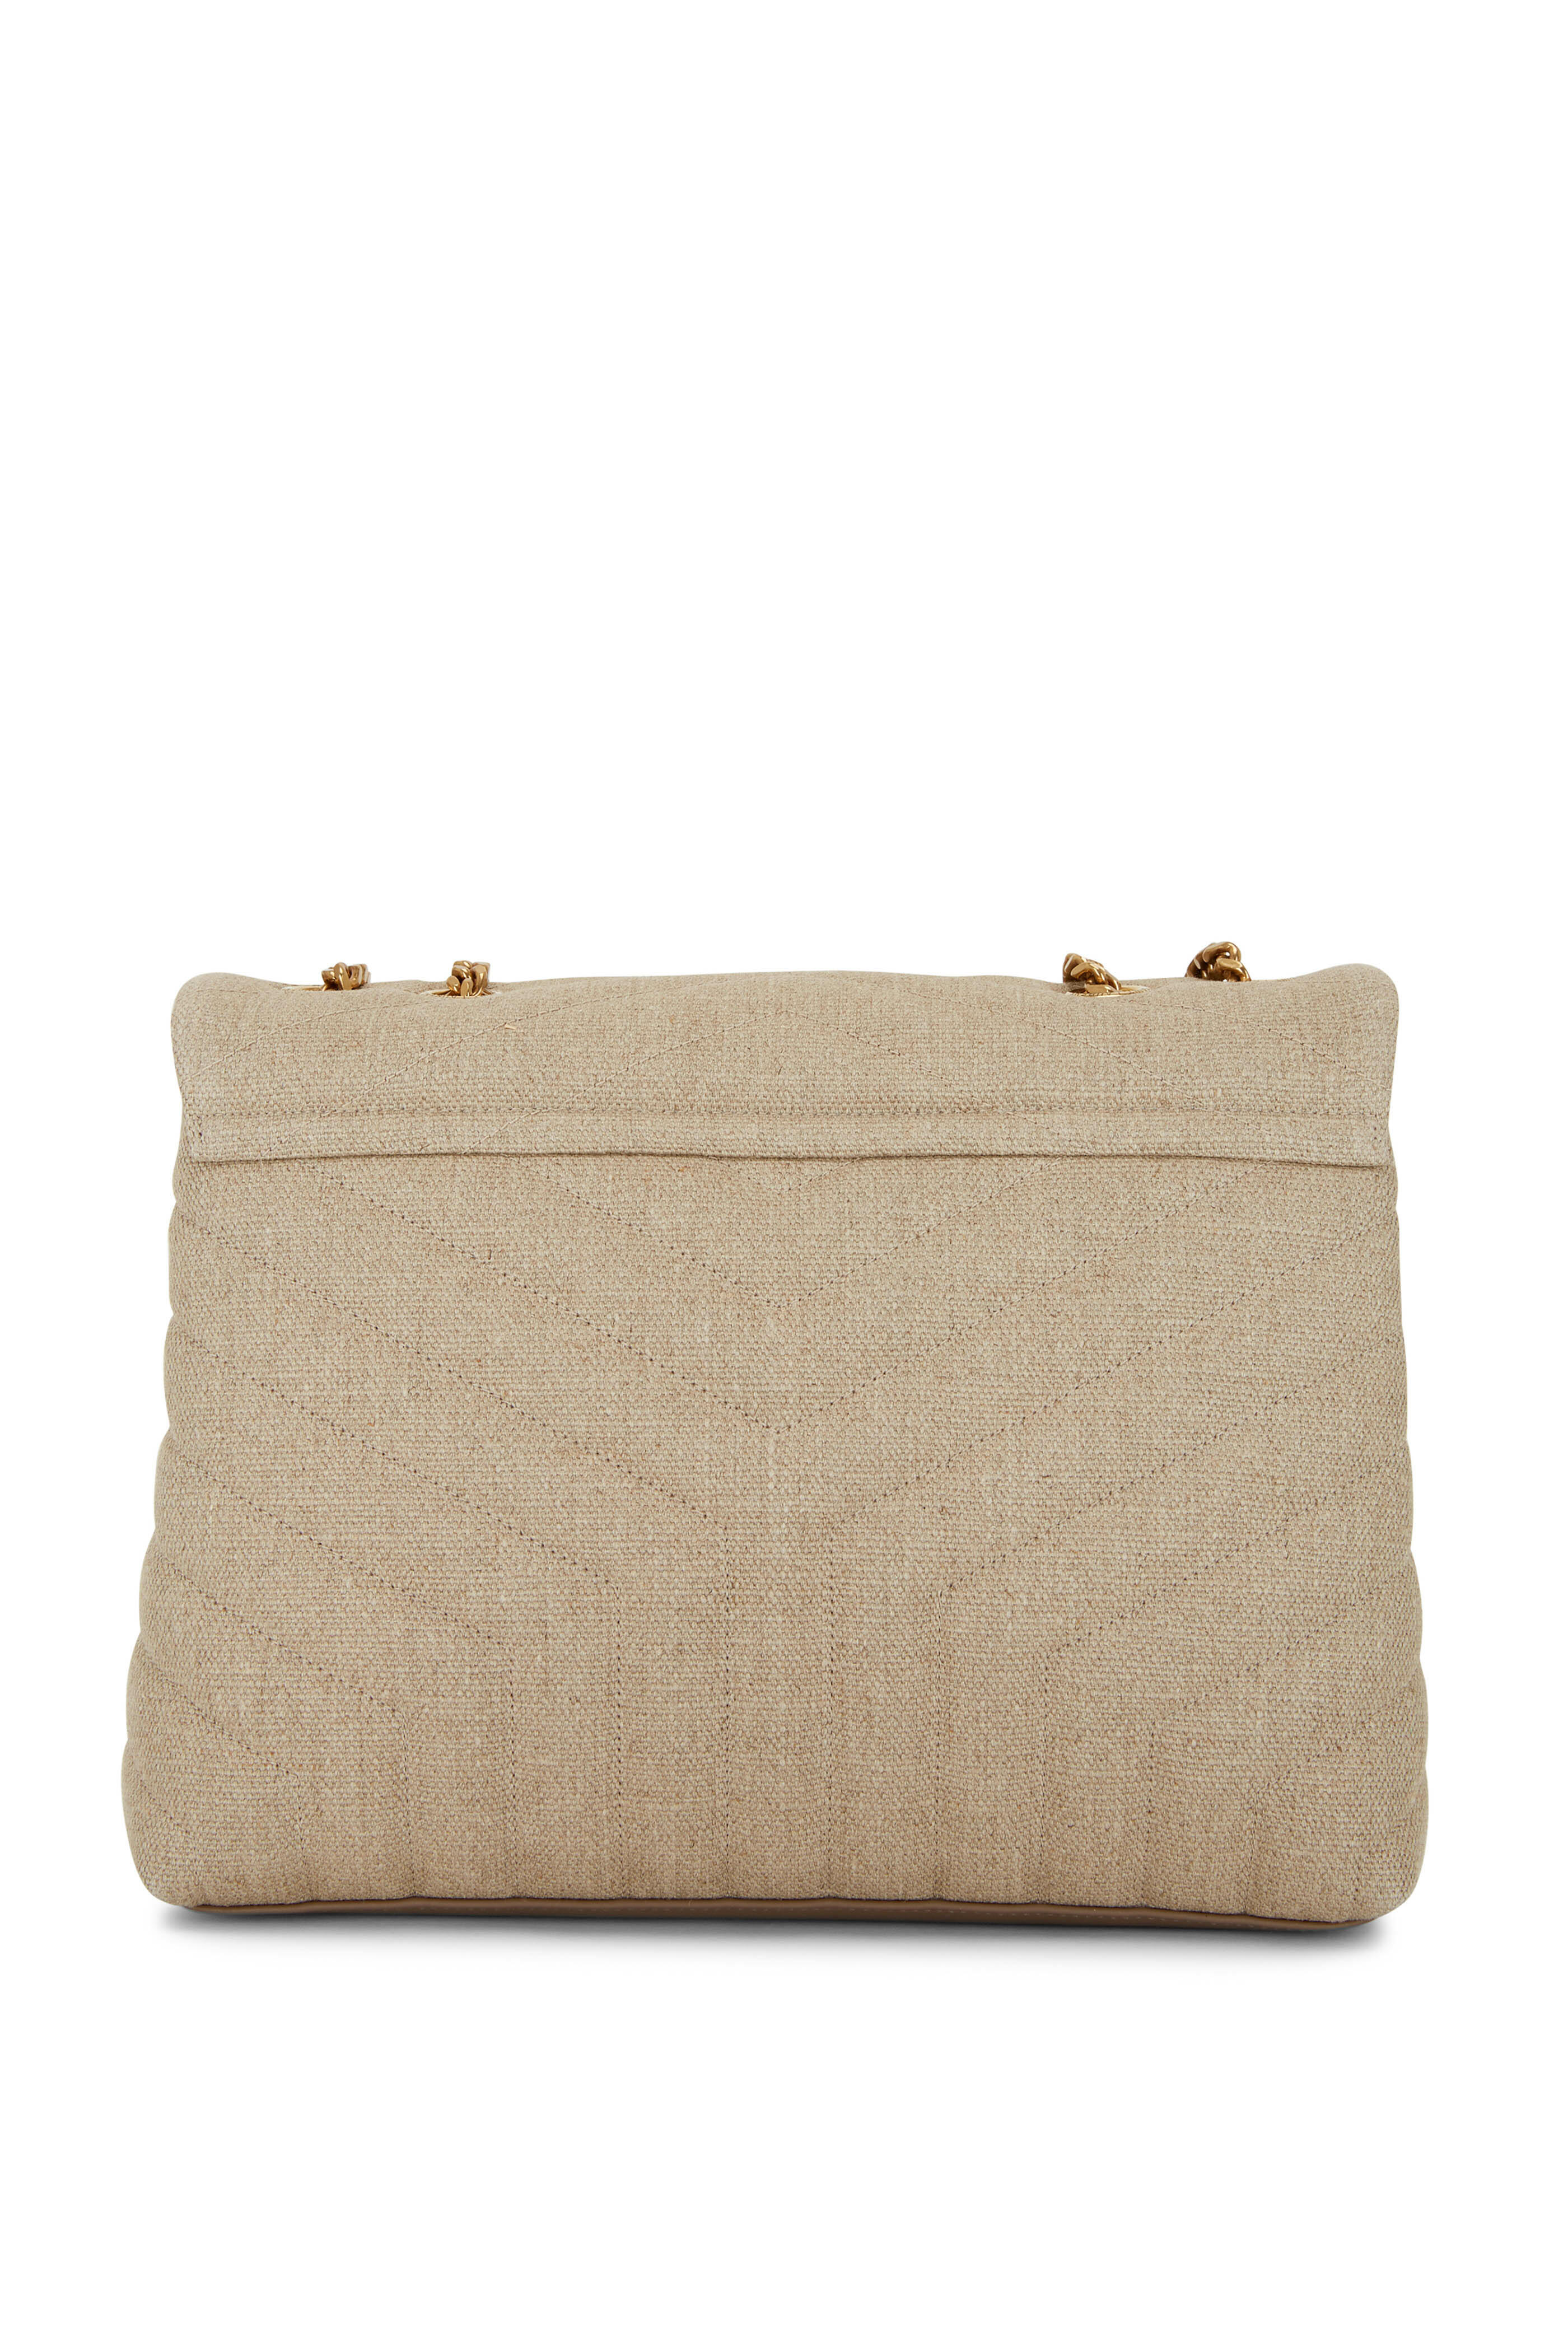 Saint Laurent Loulou Small Linen Shoulder Bag in Natural